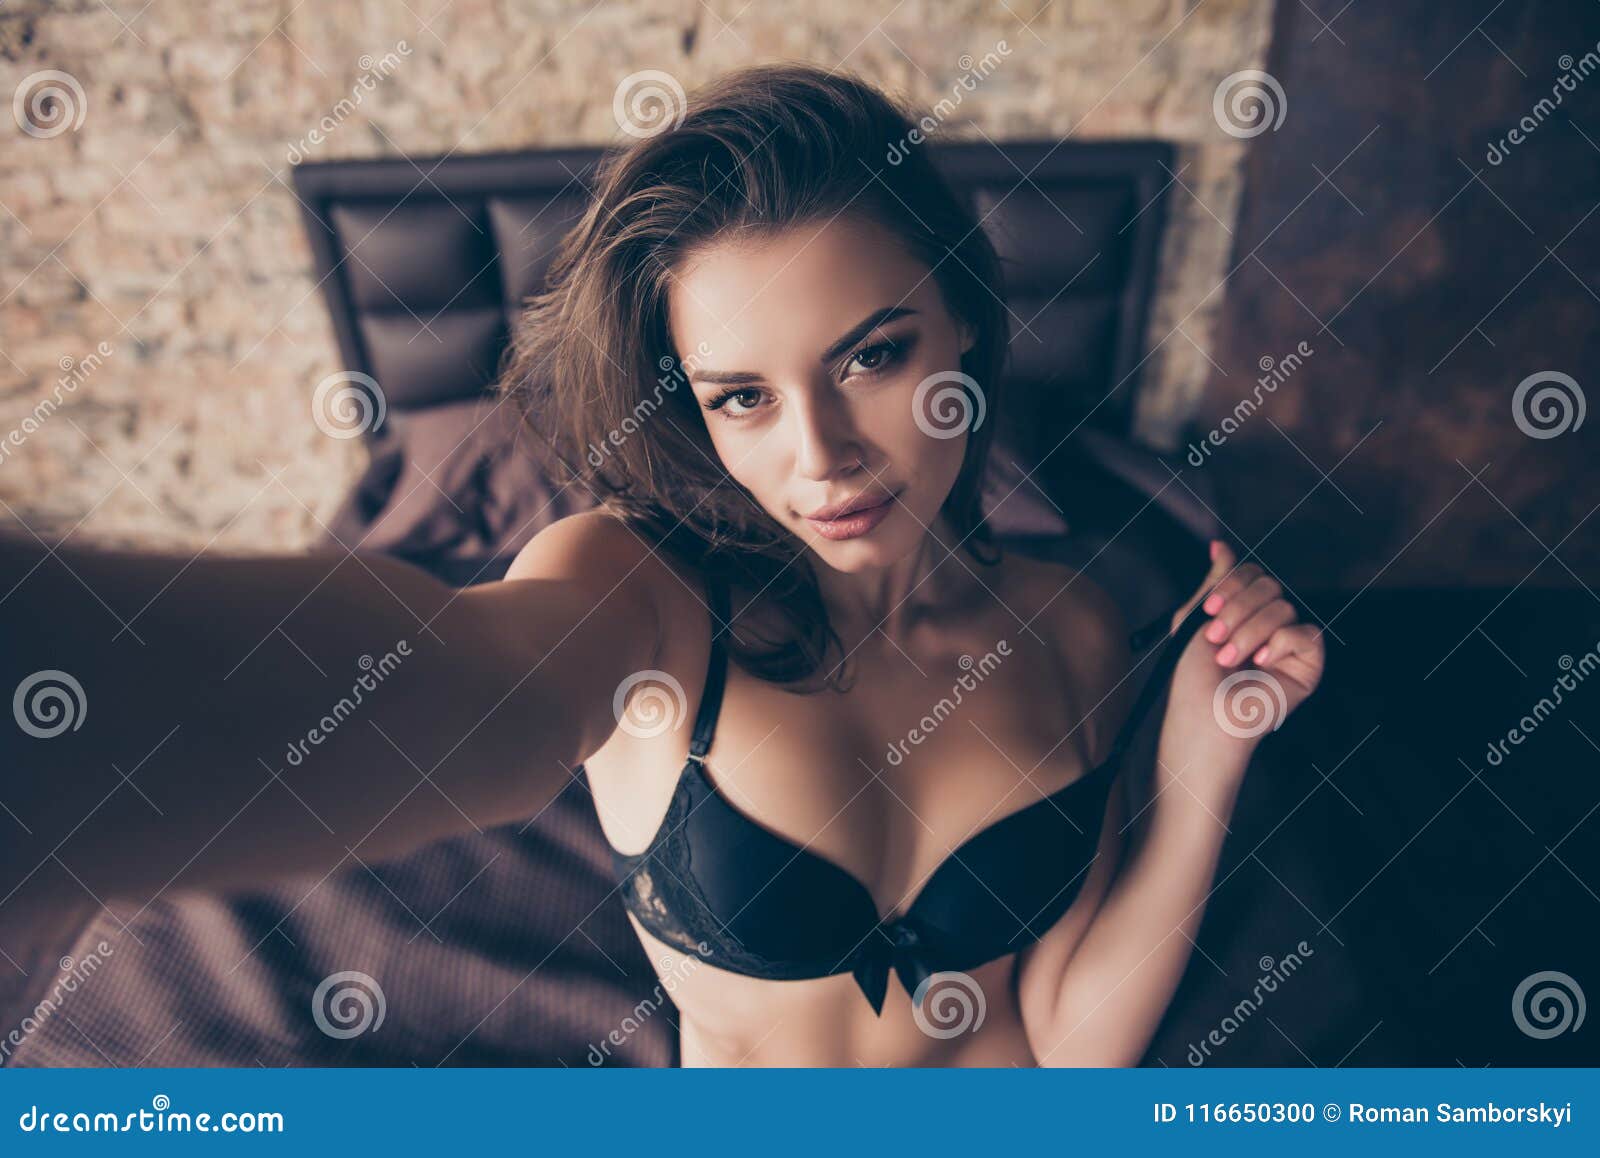 naughty women selfie sex photo